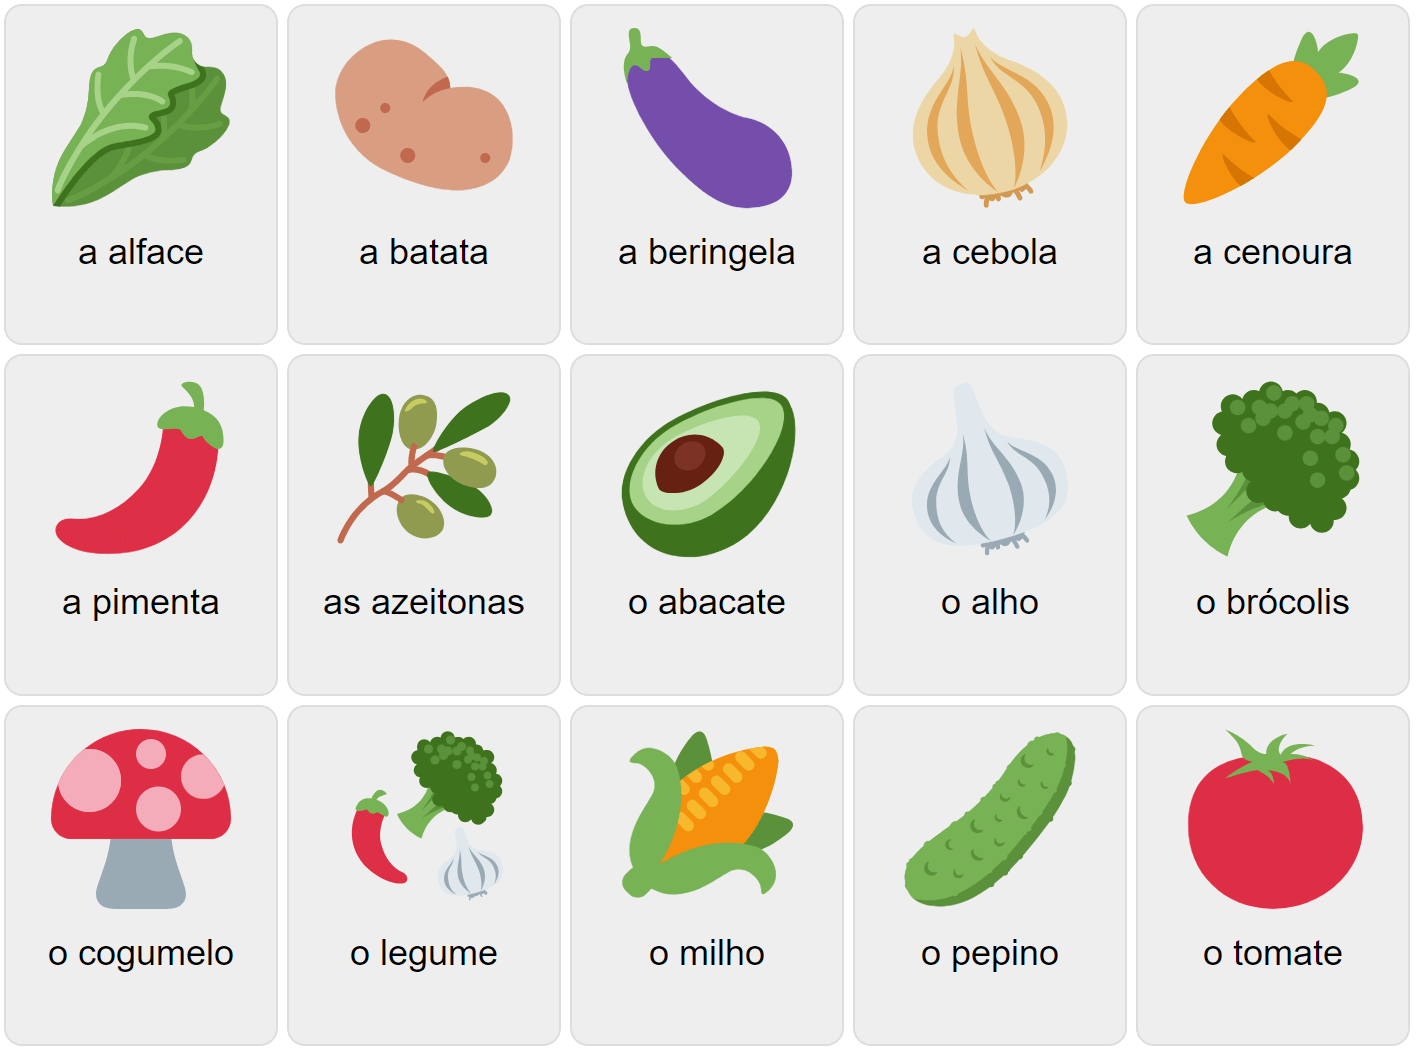 Vegetables in Portuguese